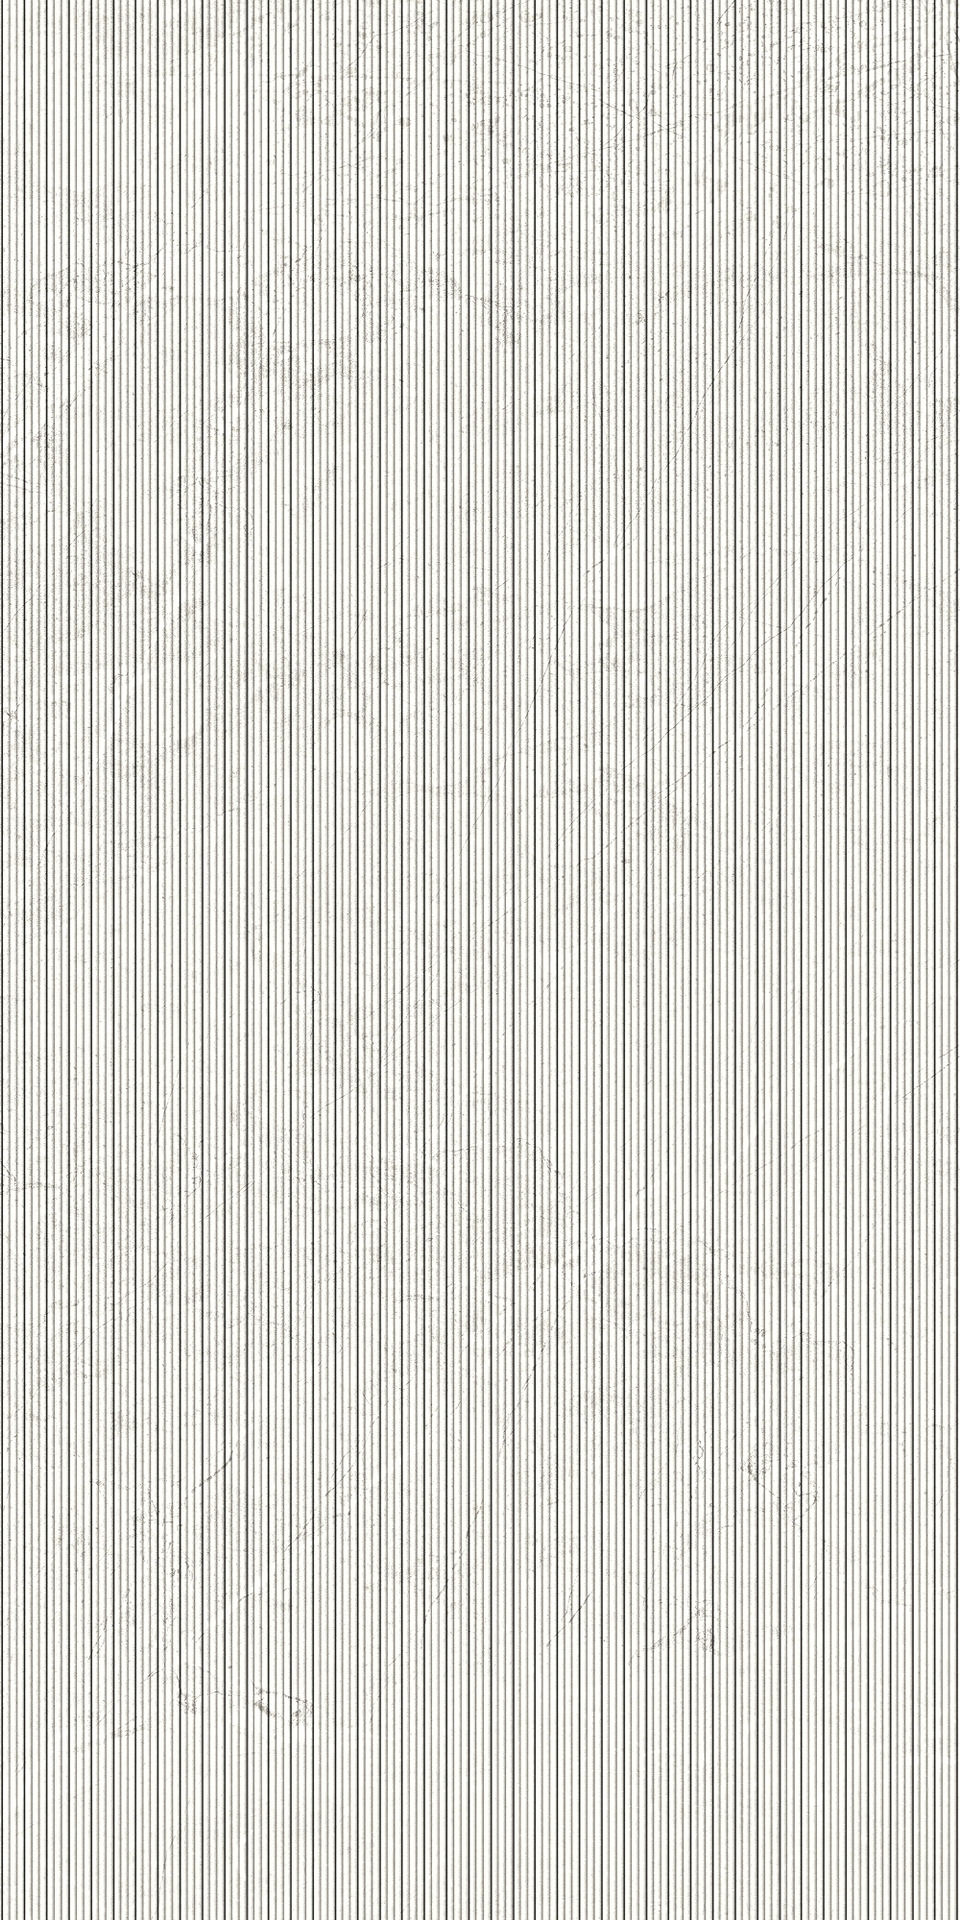 Unicom Starker Evostone Ivory Struttura Naturale Ivory 7890 natur struktur 30x60cm Texture